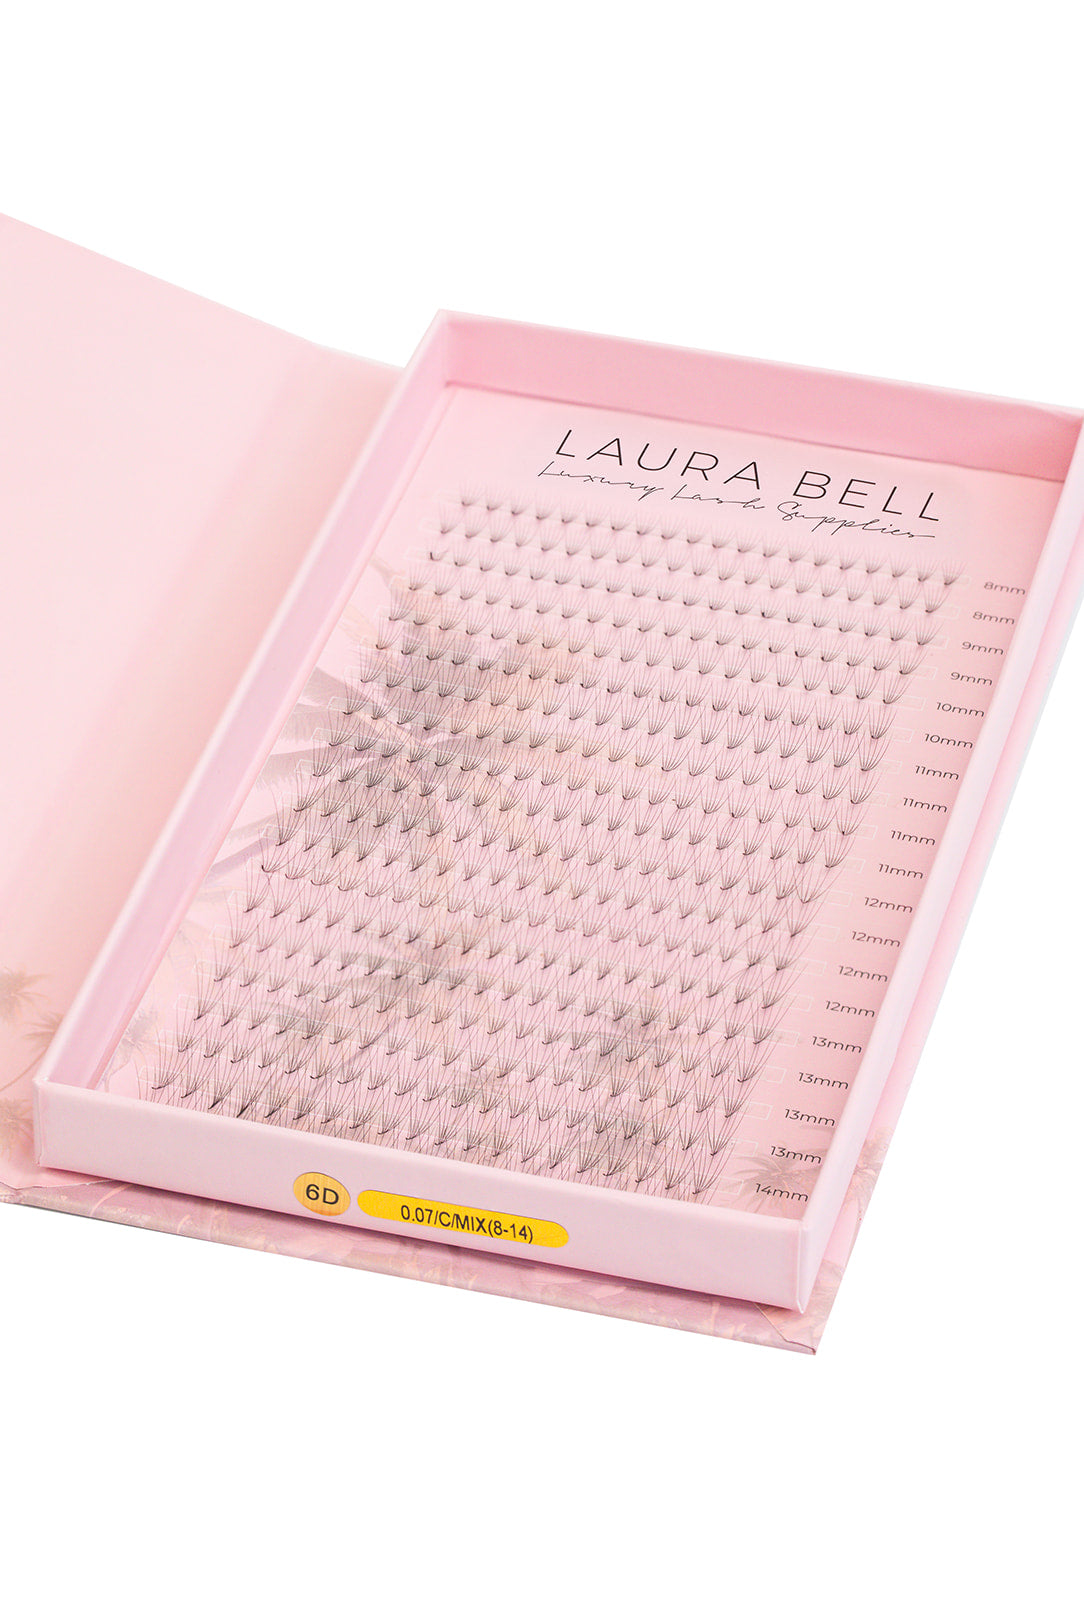 6D Premade  Volume Fans (400 Fans) - Laura Bell Luxury Lash Supplies